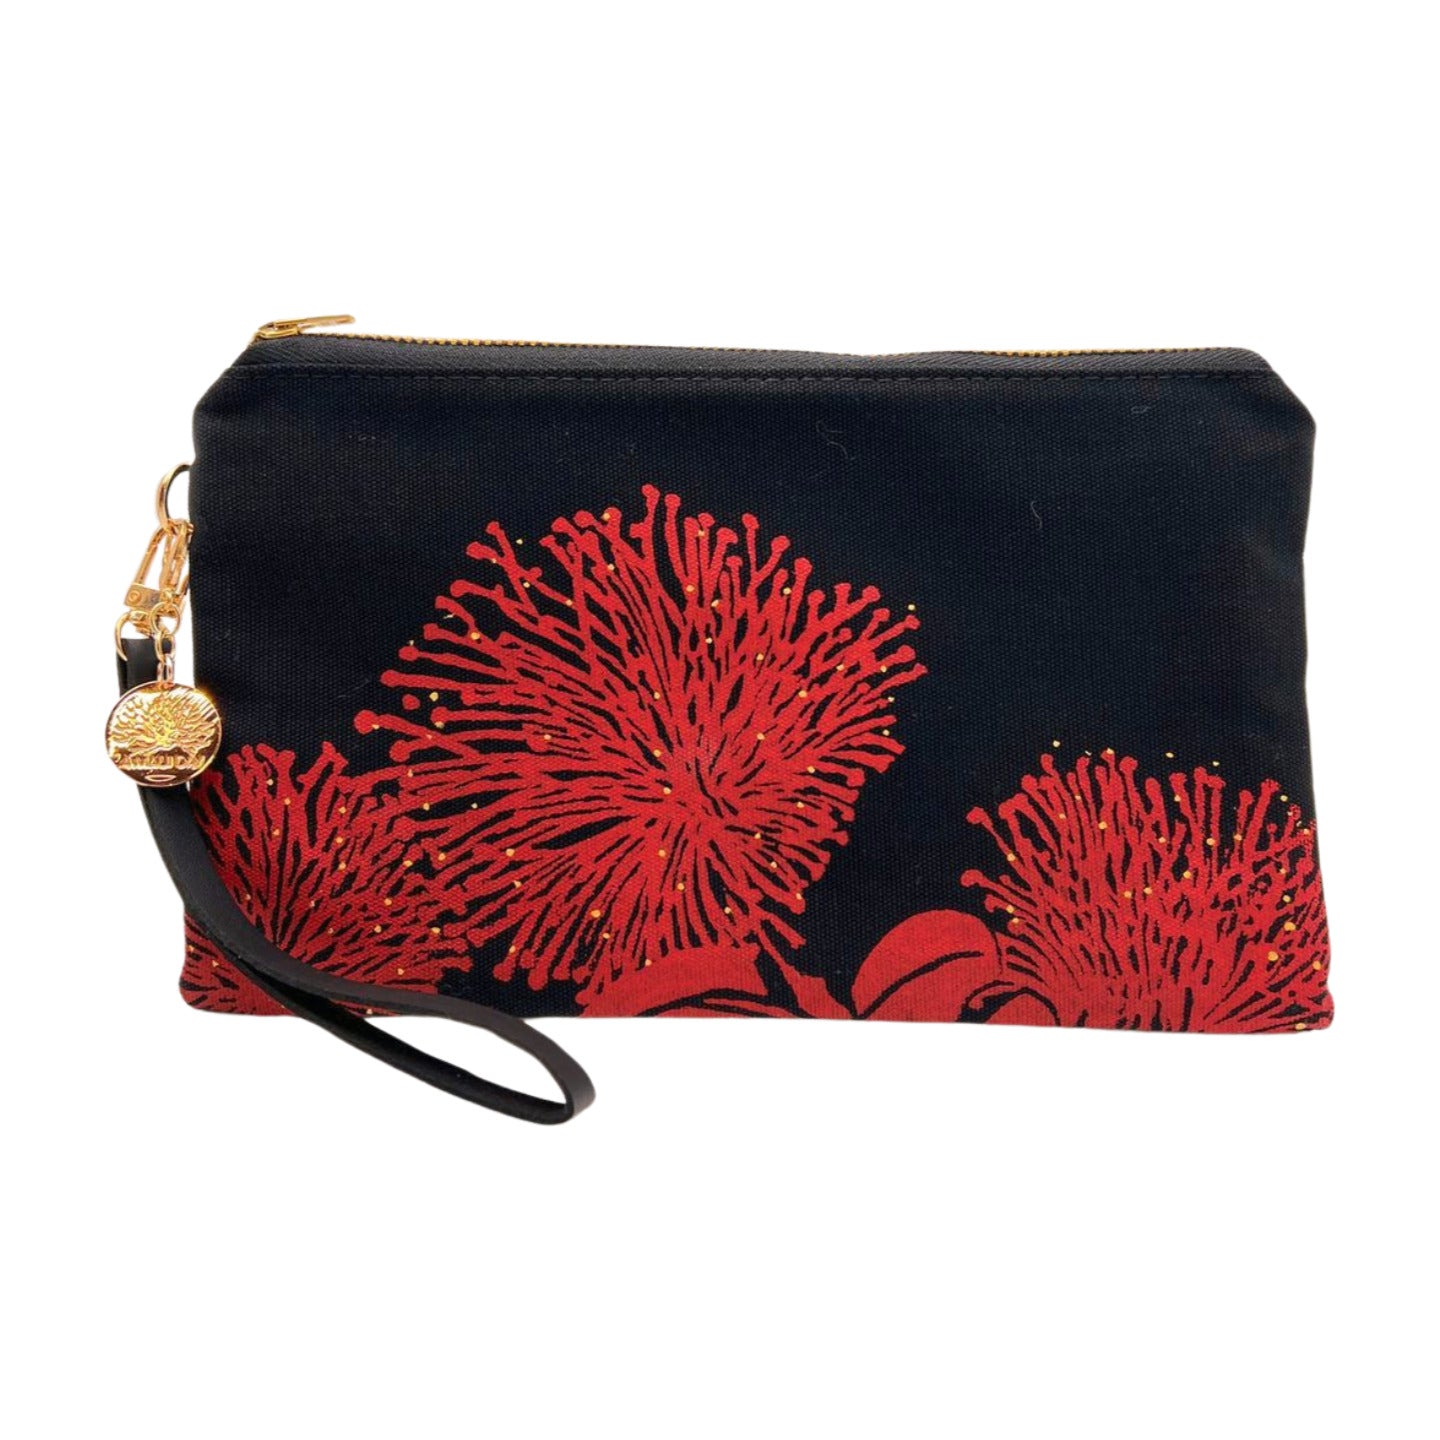 Pop-Up Mākeke - A Maui Day Original Handbags - Handprinted Small Handbag - Red 'Ohi'a on Black Canvas - Front View